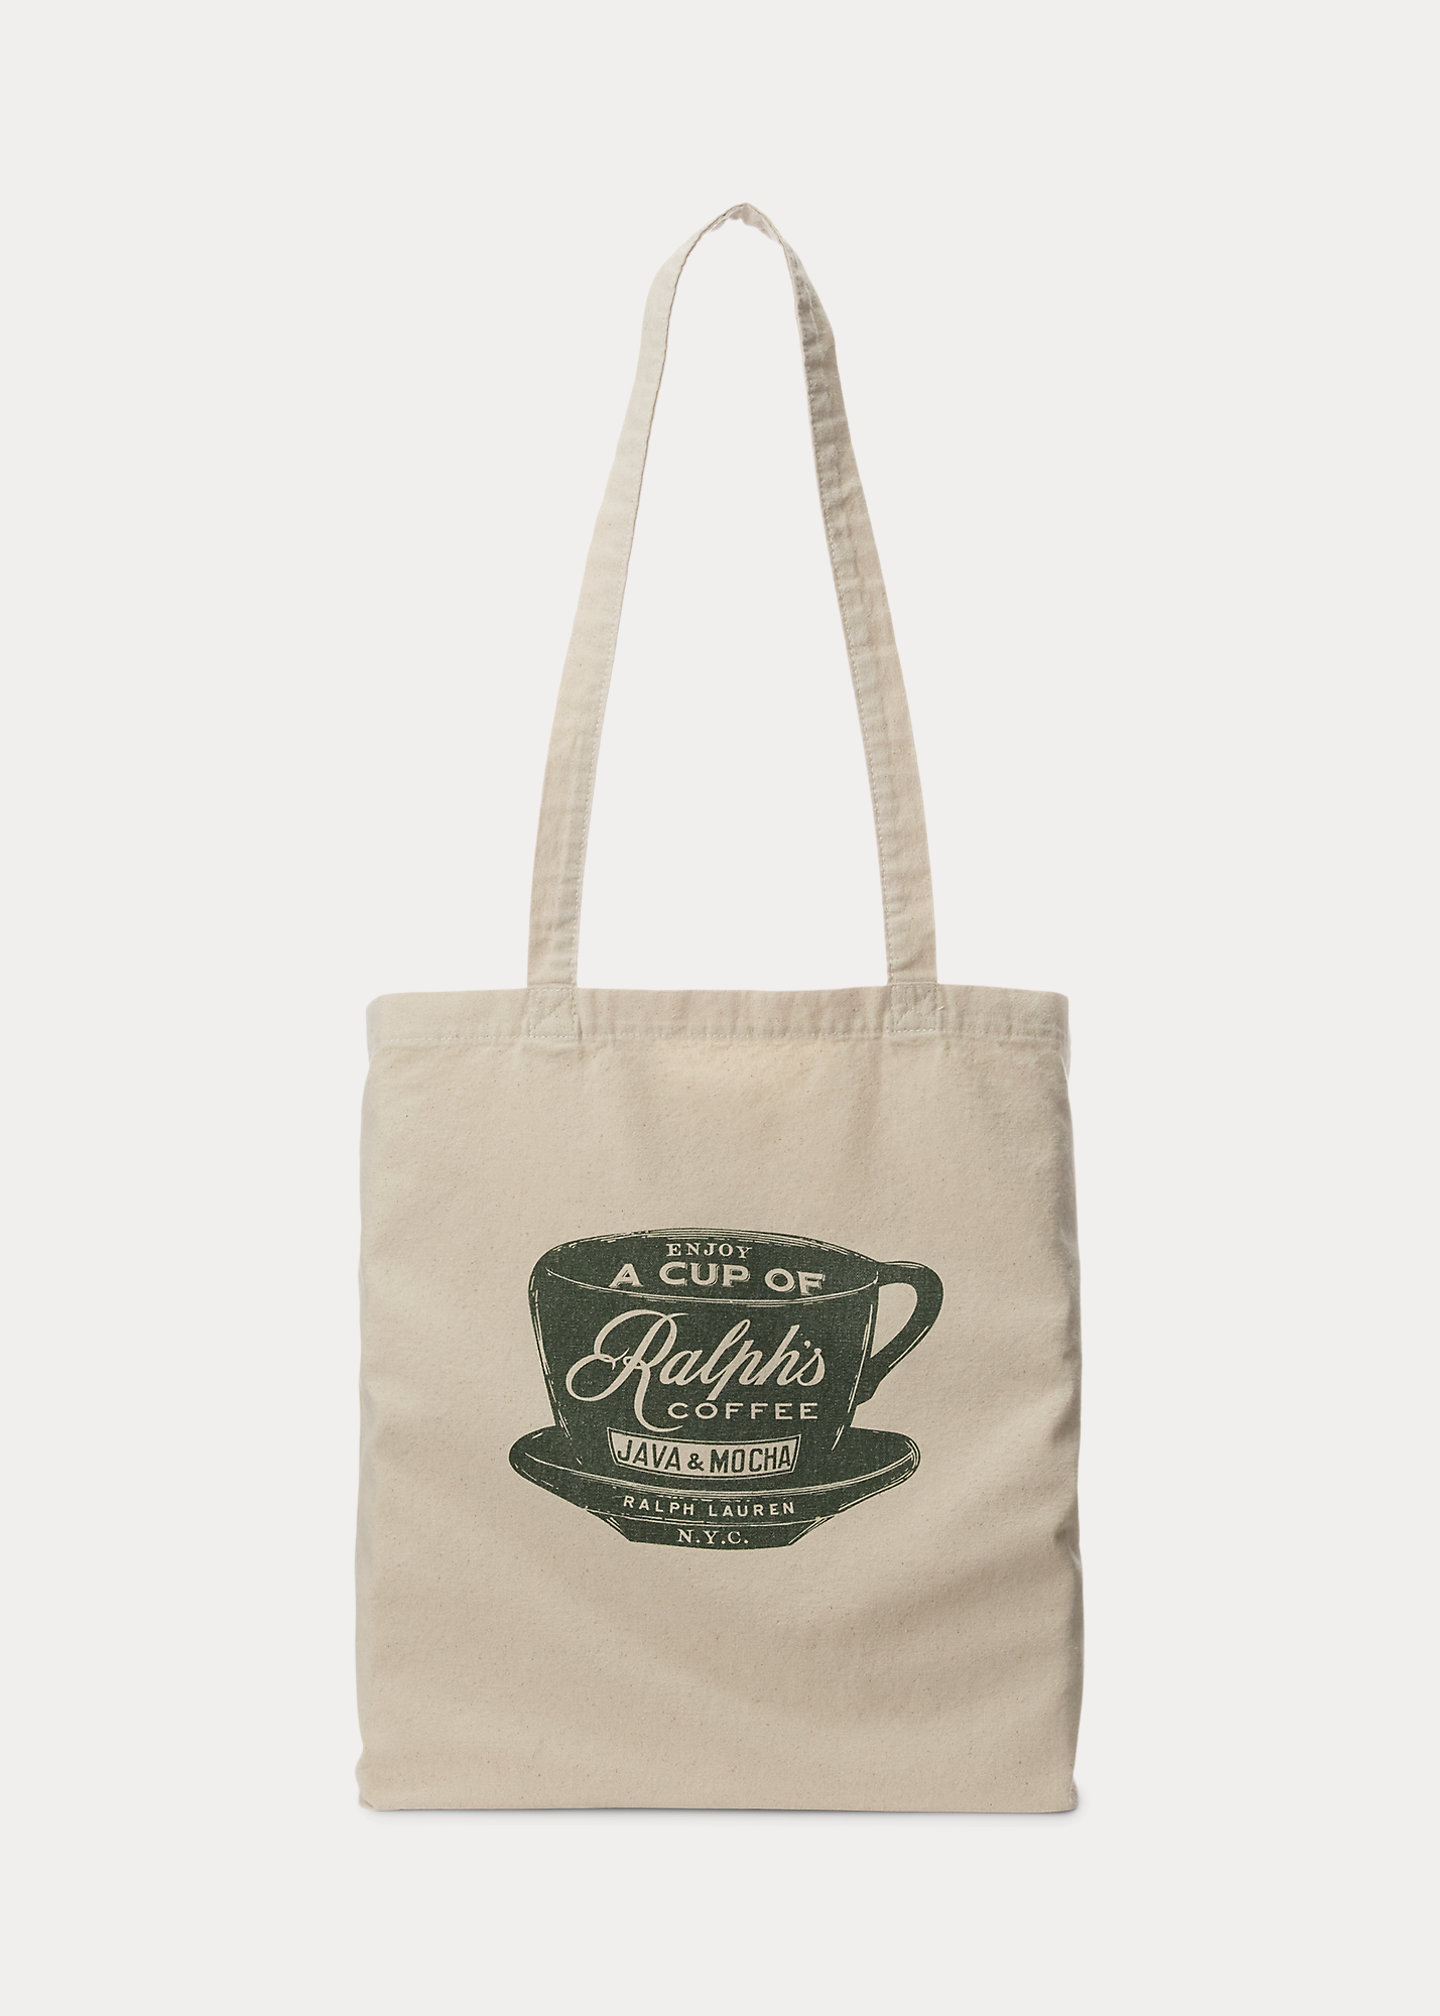 stylish handbagsRalph’s Coffee Tote Bag-,$1.39